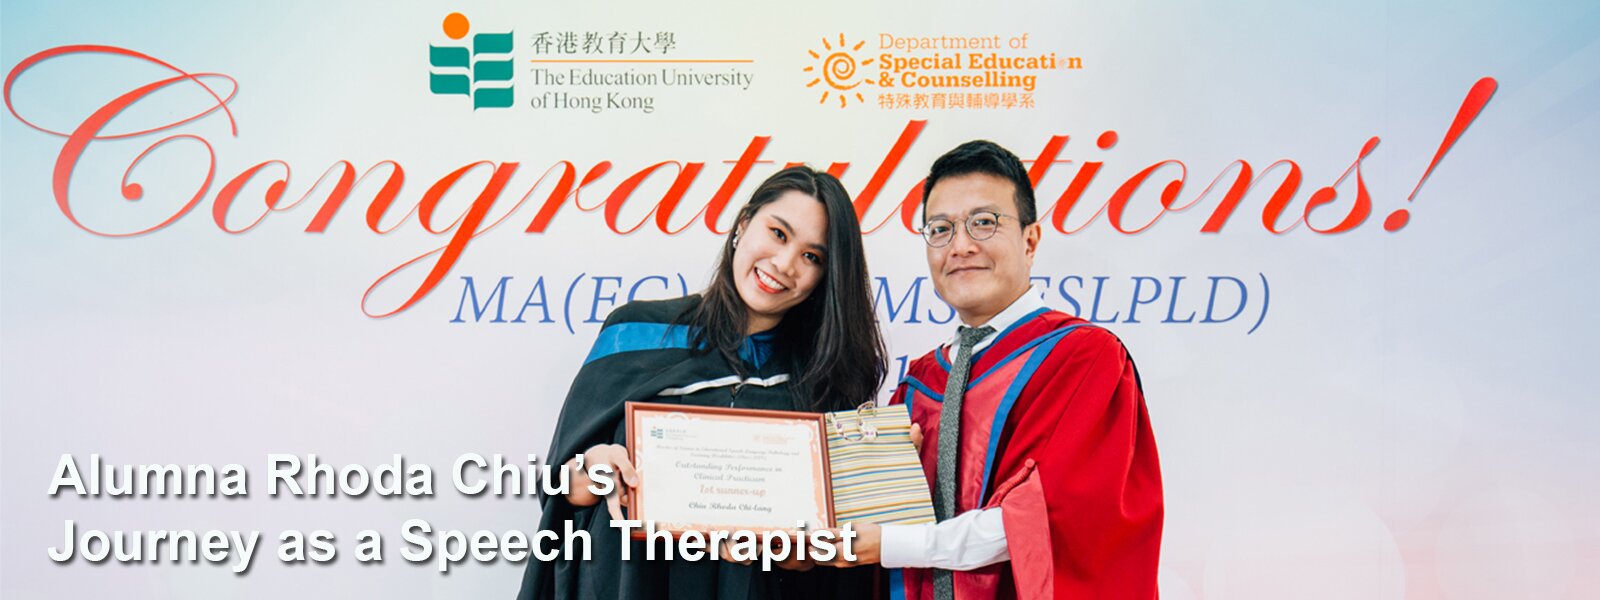 Alumna Rhoda Chiu’s Journey as a Speech Therapist